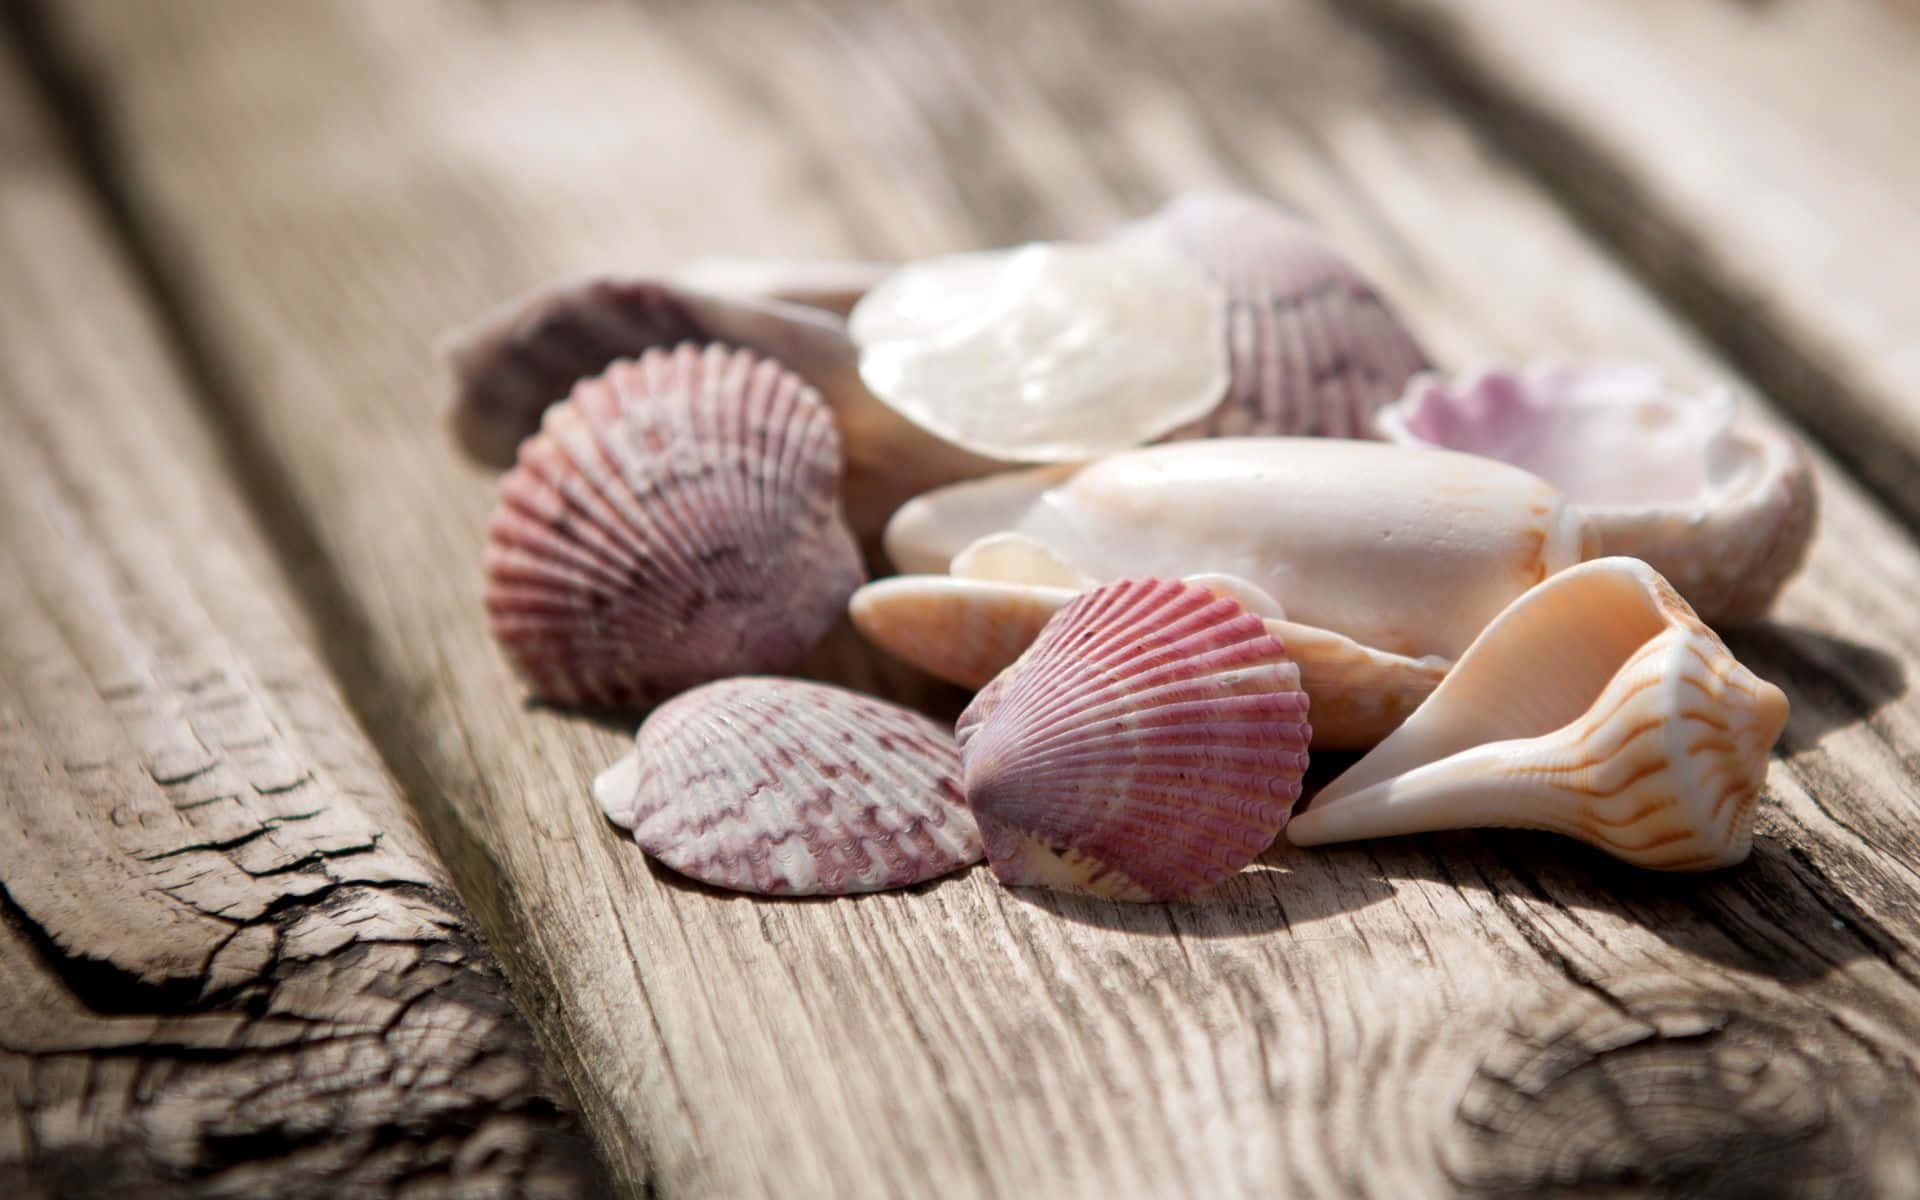 A collection of seashells against a sandy beach